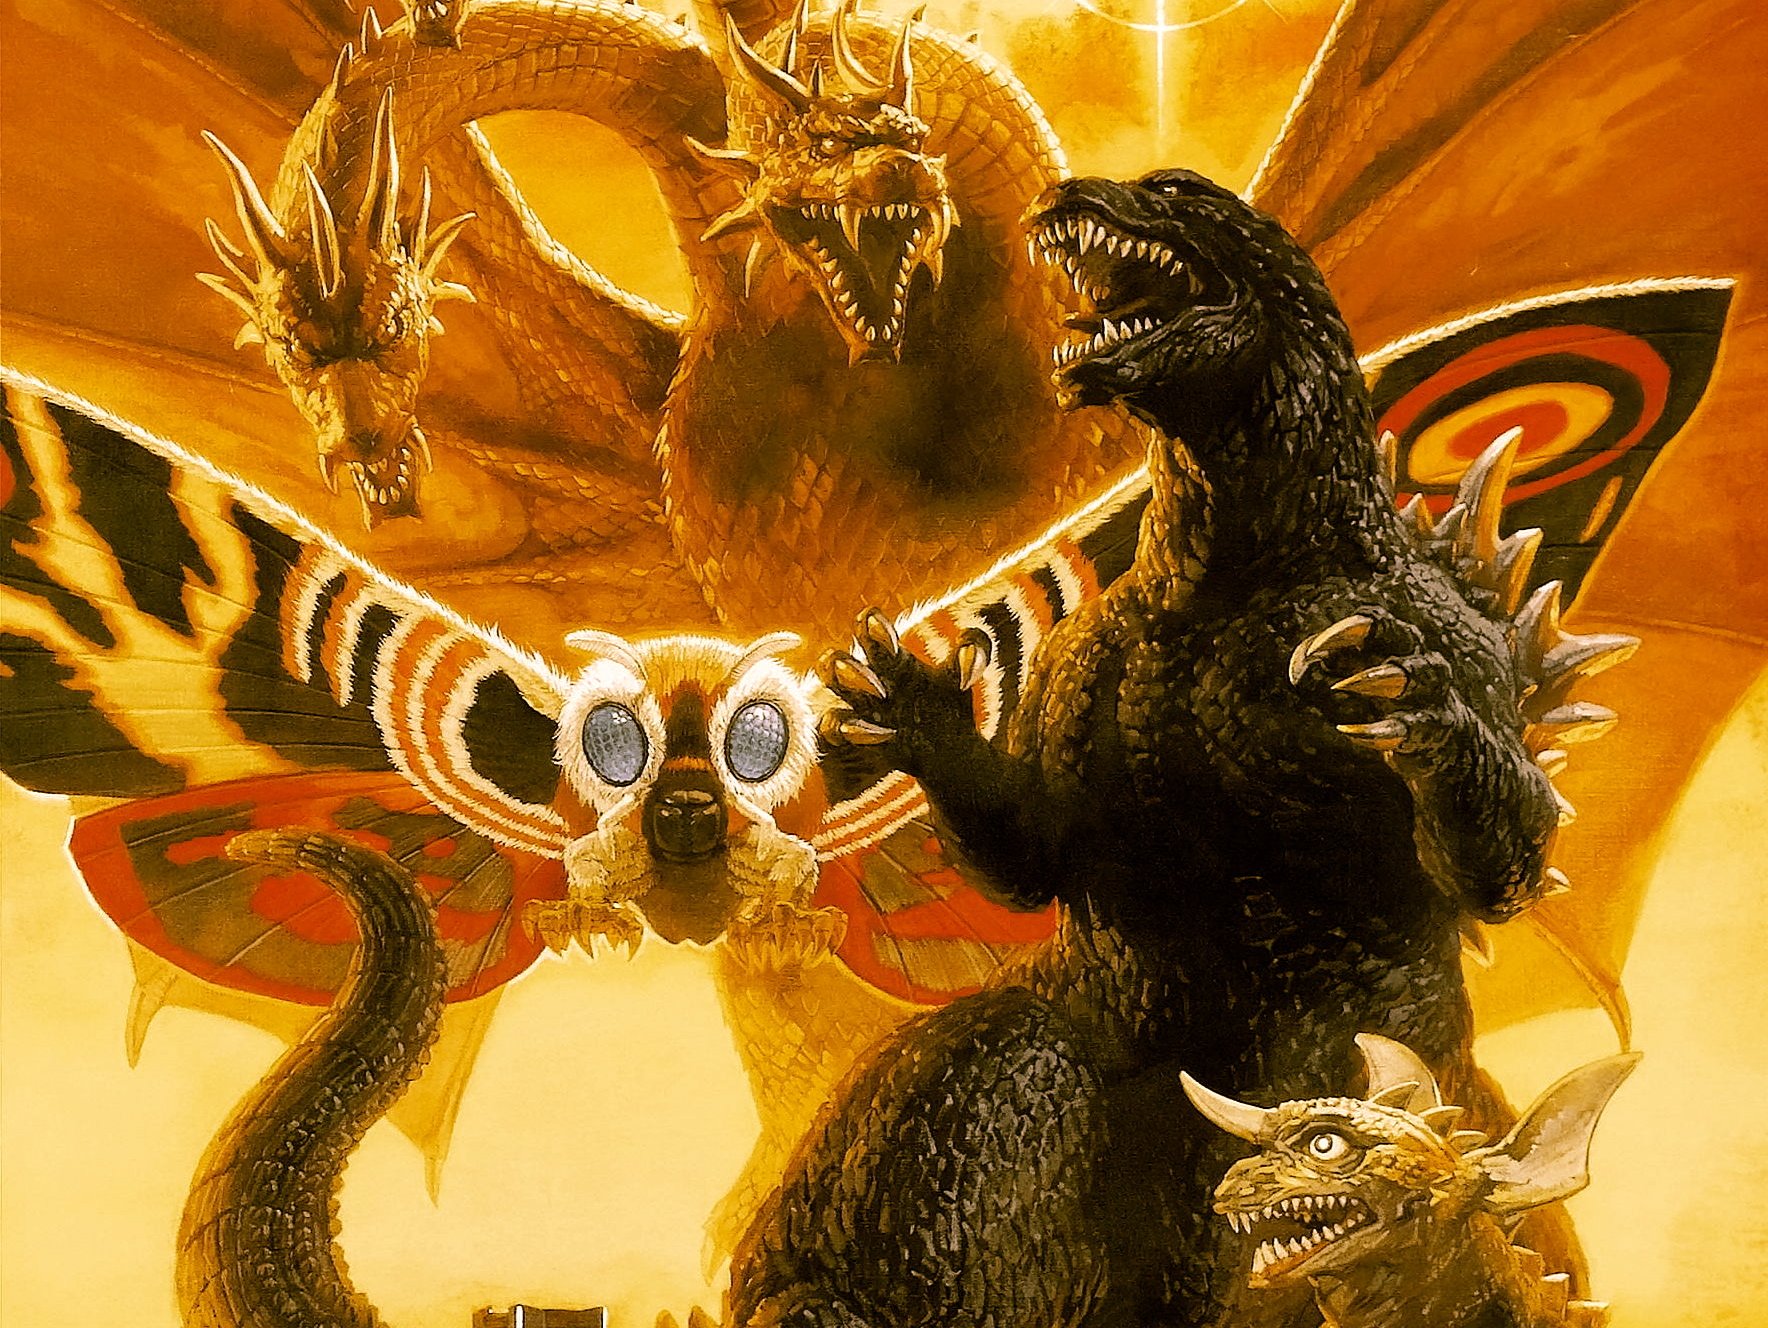 Godzilla vs ghidorah Wallpaper for Android - Download | Cafe Bazaar